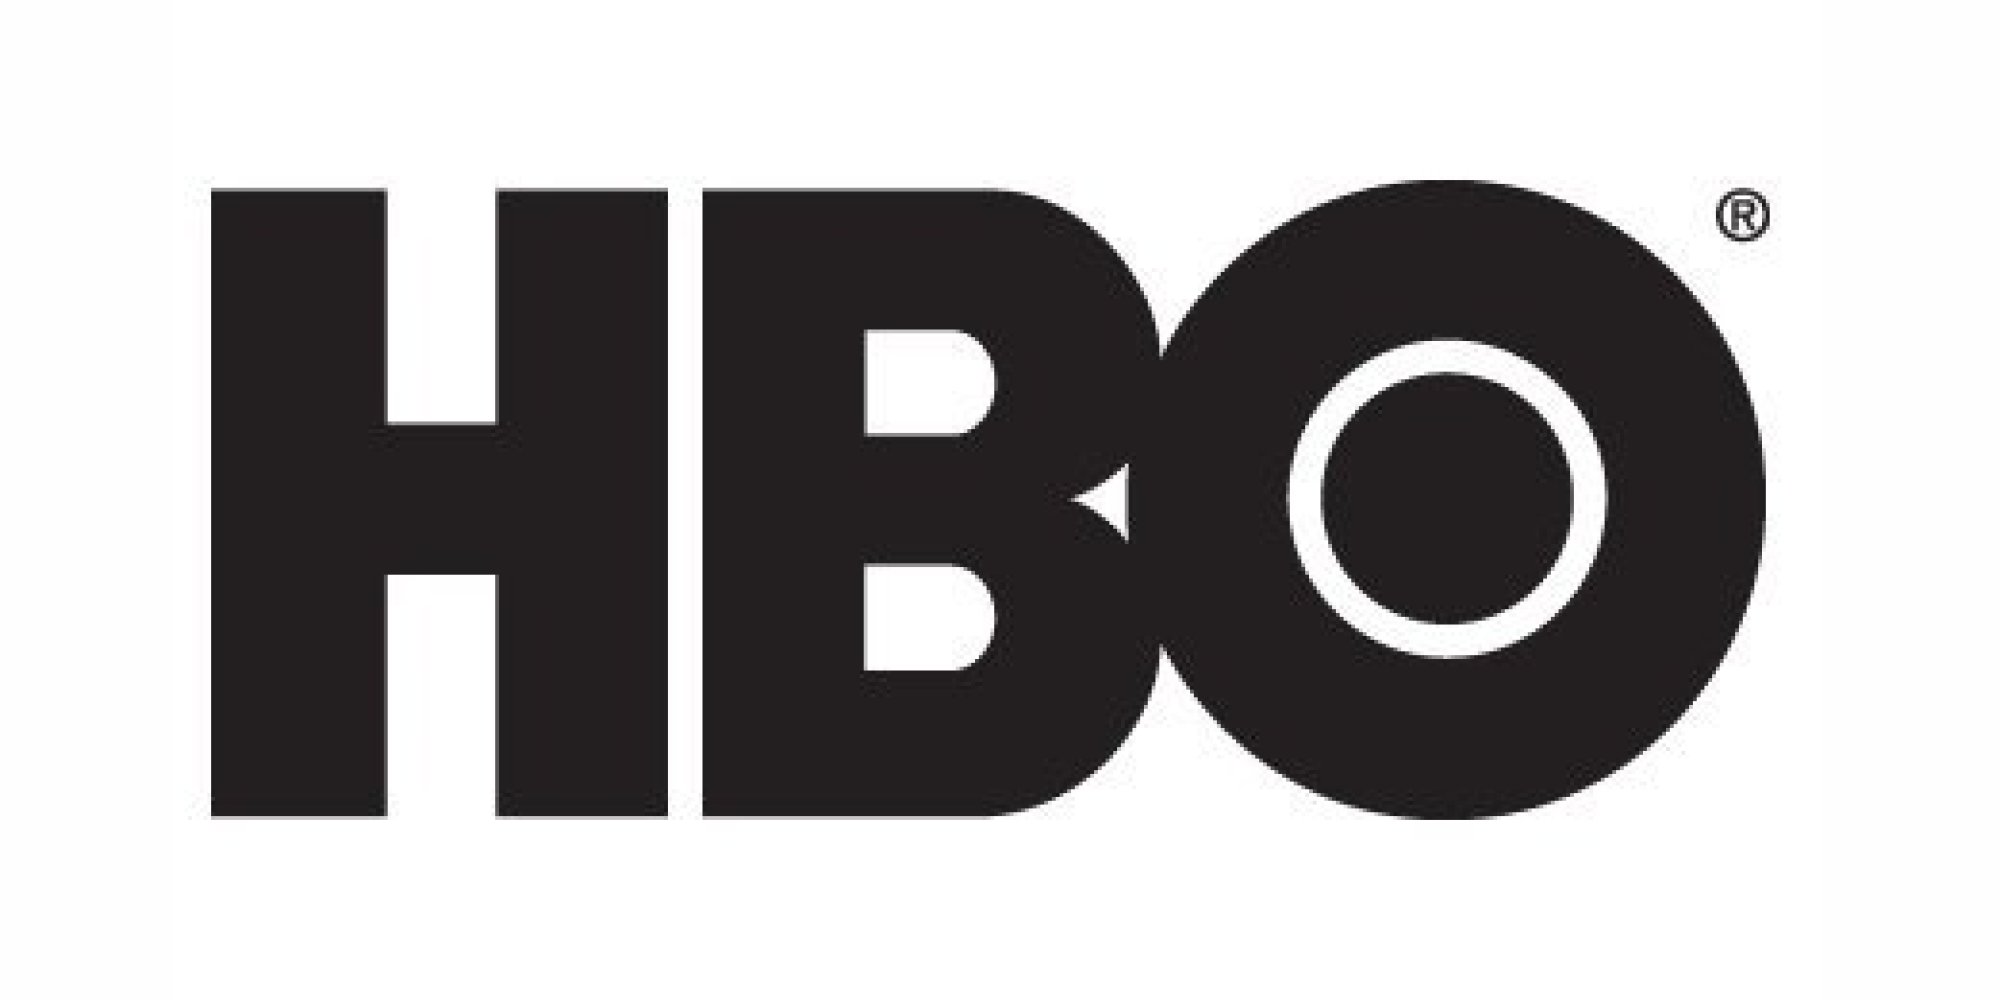 HBO Max incluirá novelas e séries da Globo na América Latina e Caribe